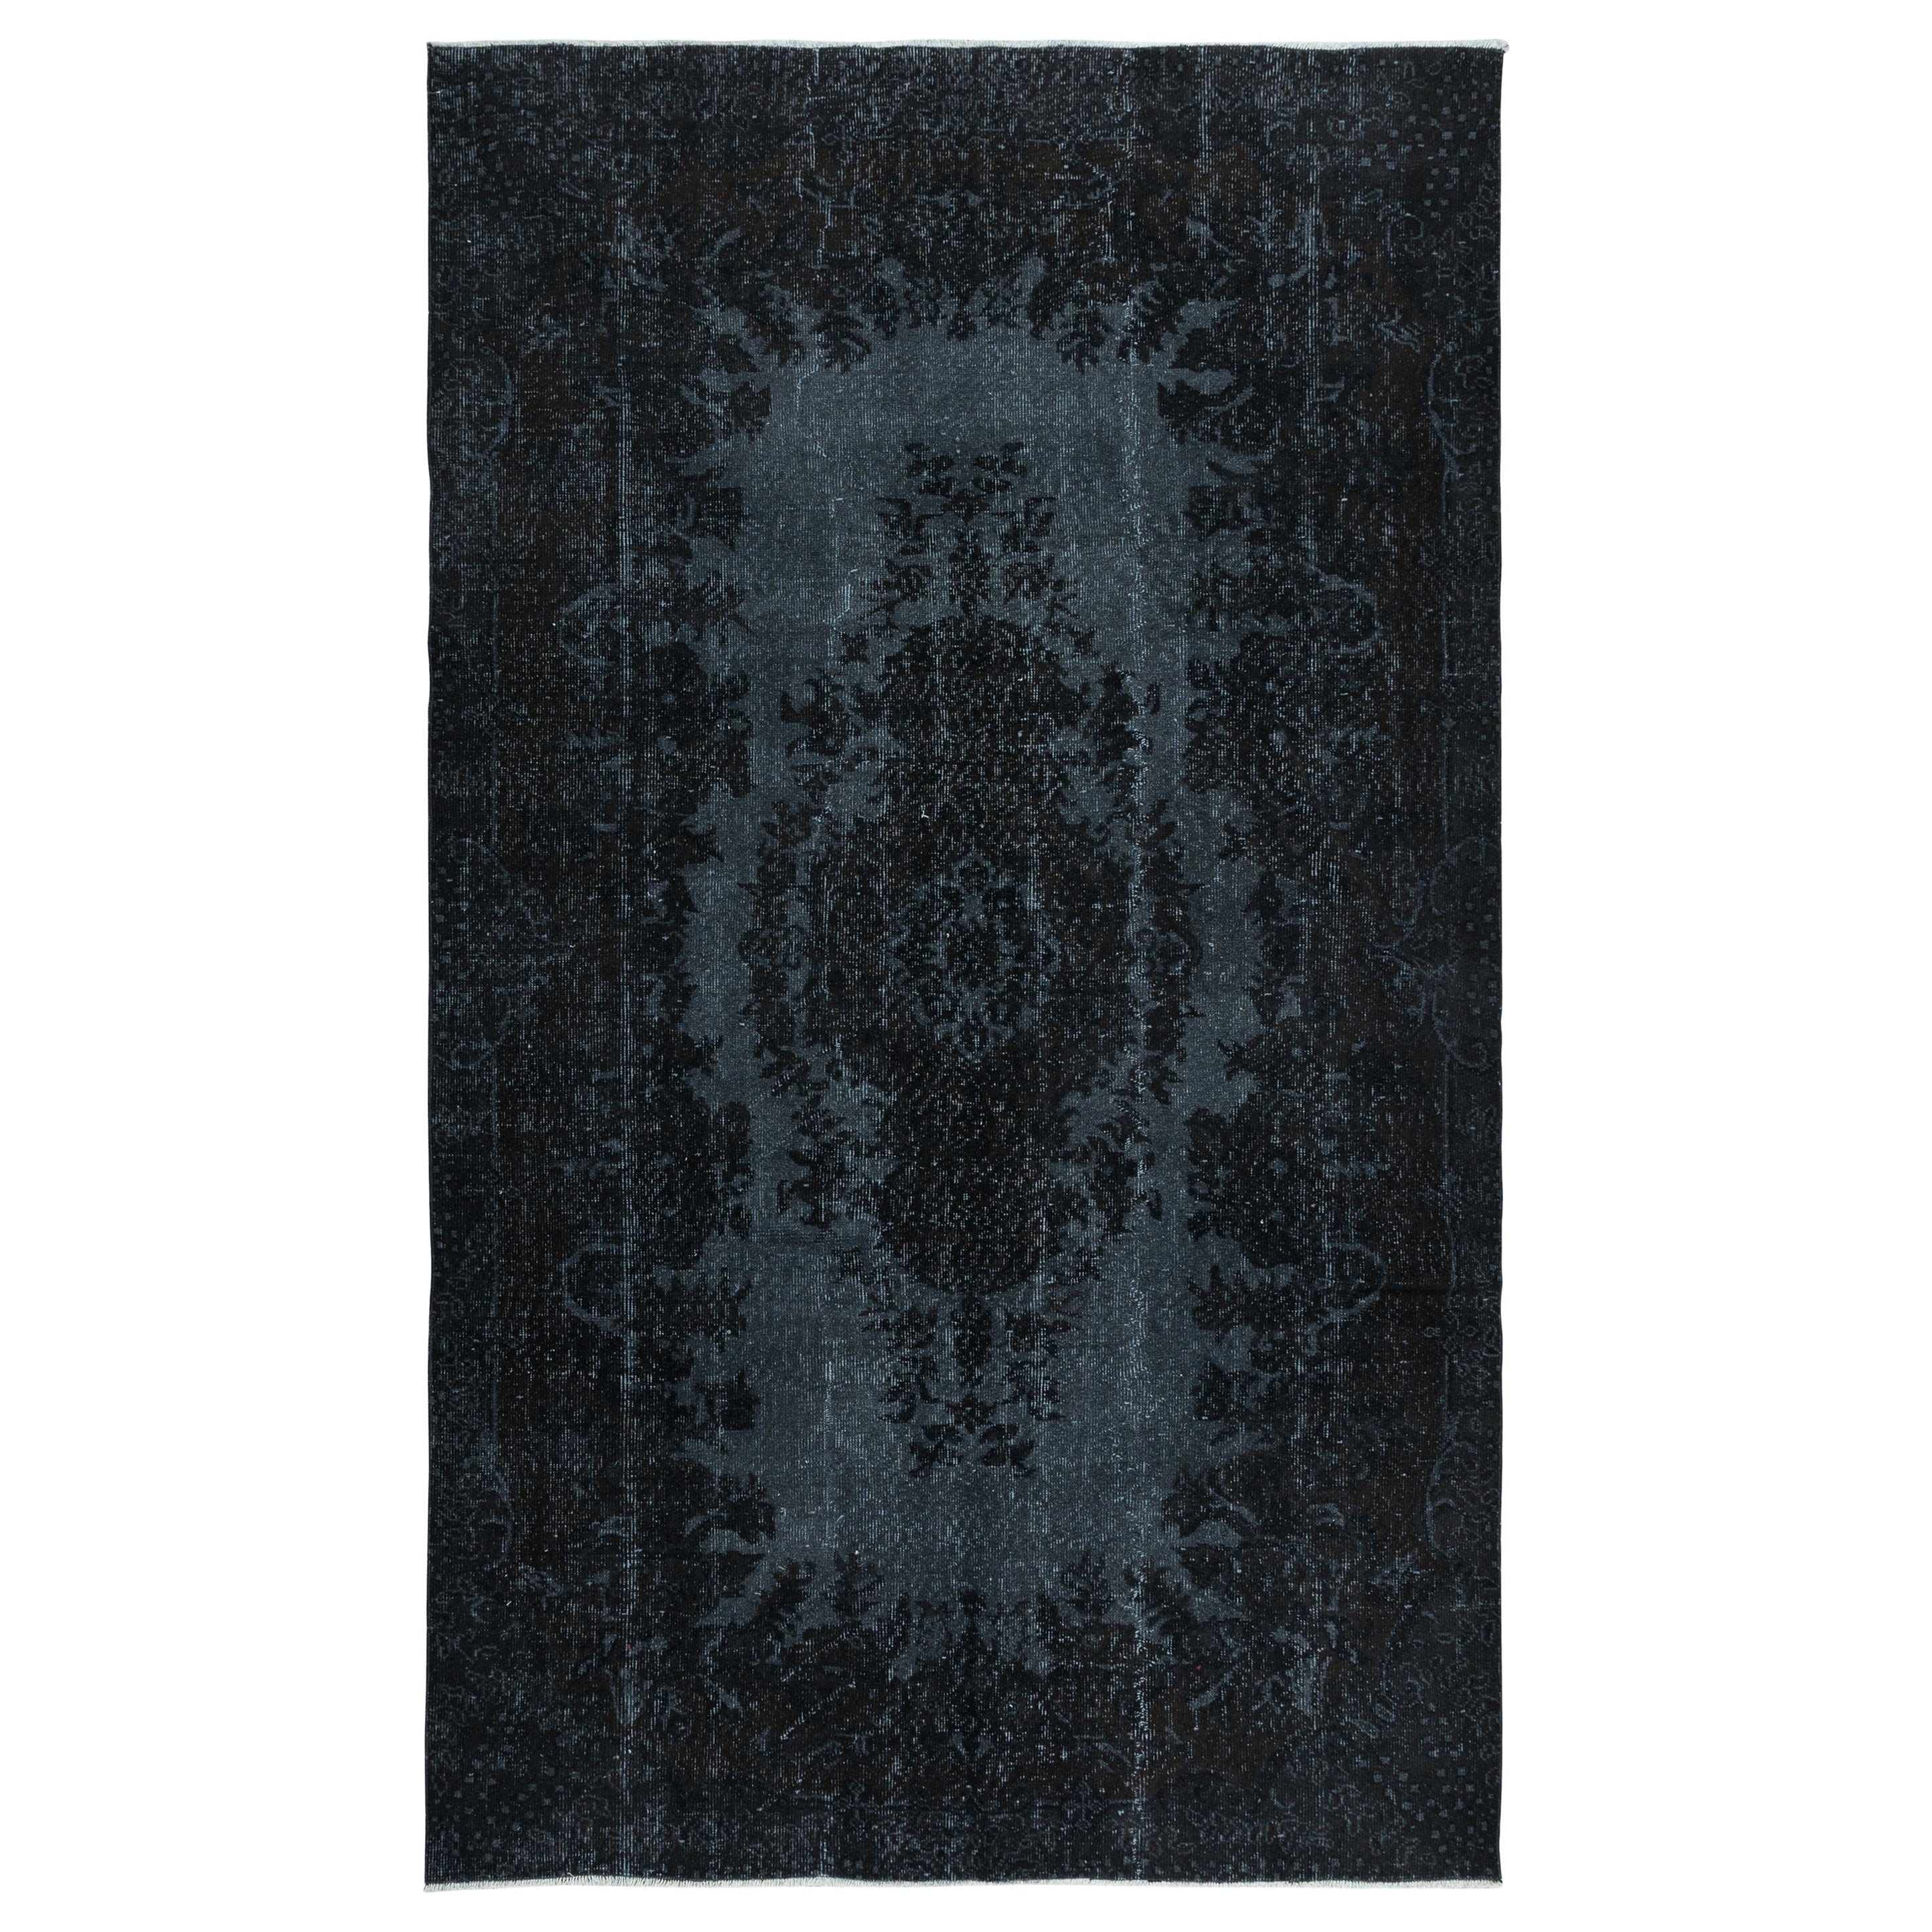 5.5x9 Ft Handmade Area Rug in Black with Medallion, Modern Turkish Carpet For Sale